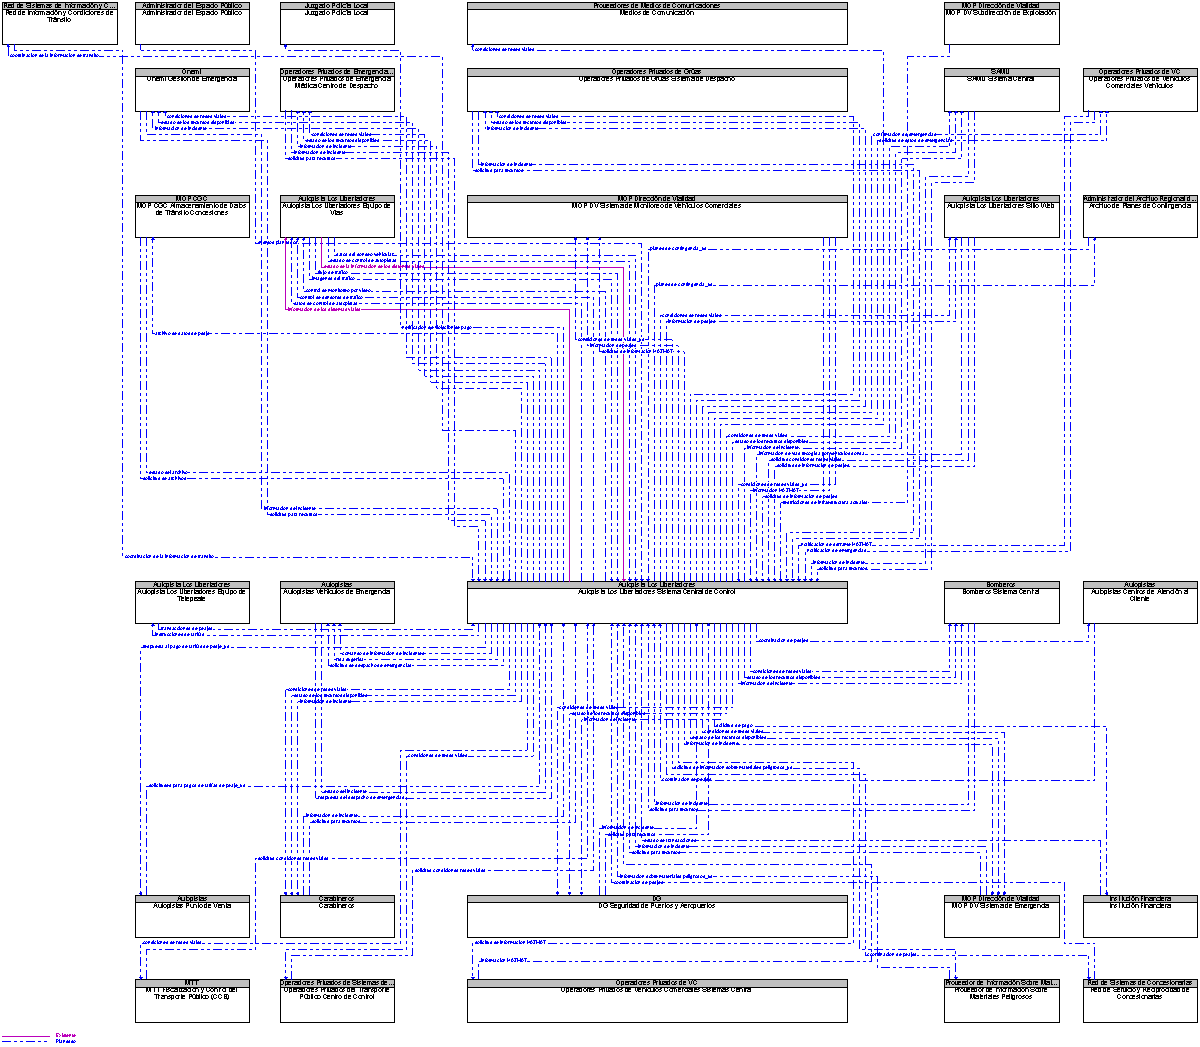 Diagrama Del Contexto por Autopista Los Libertadores Sistema Central de Control